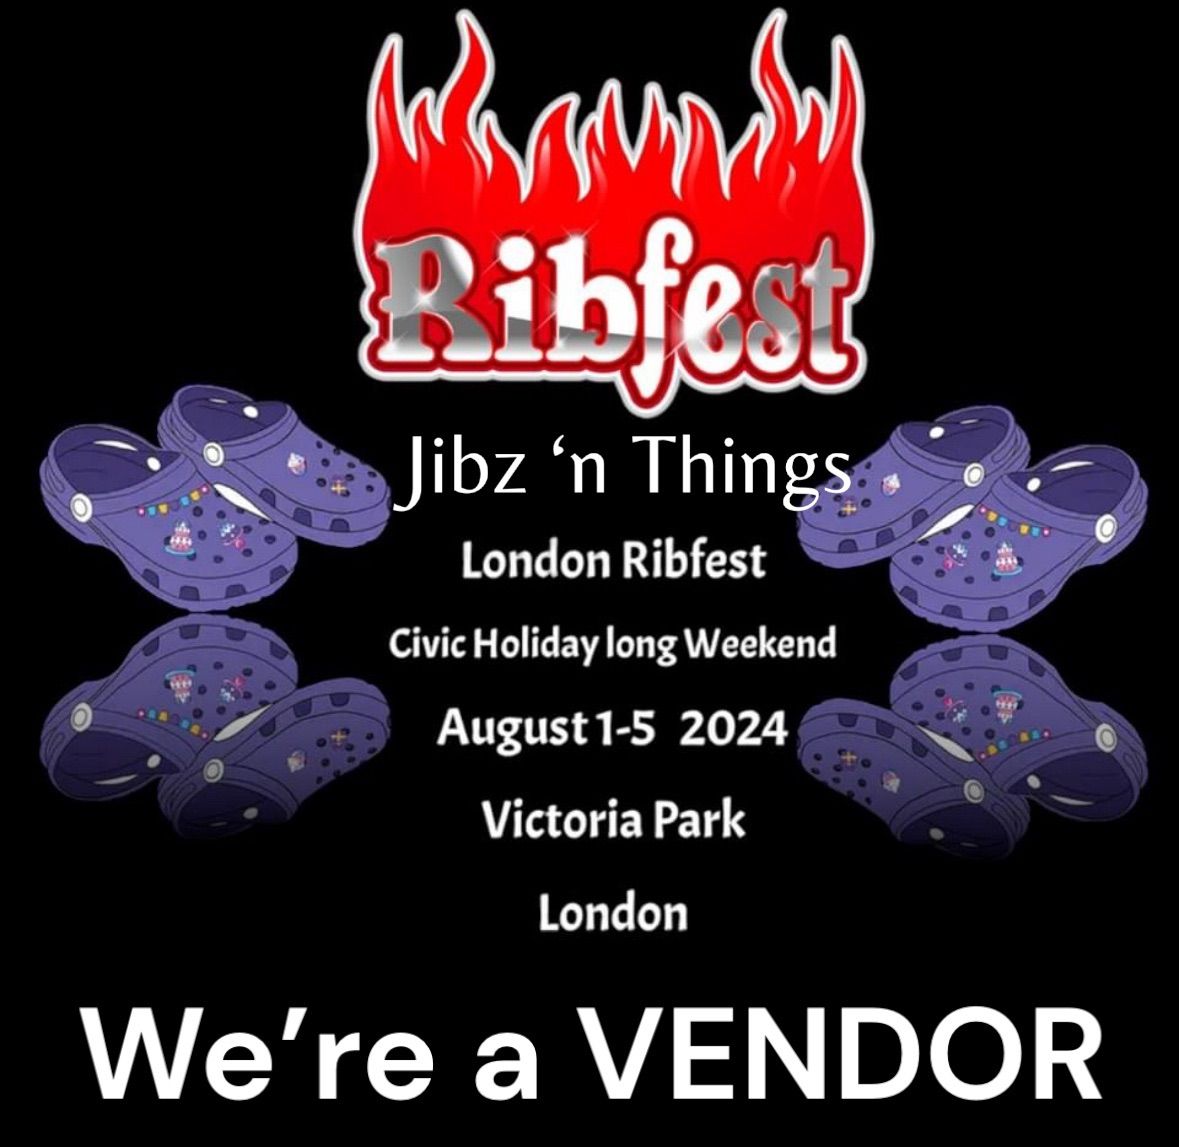 London Ribfest